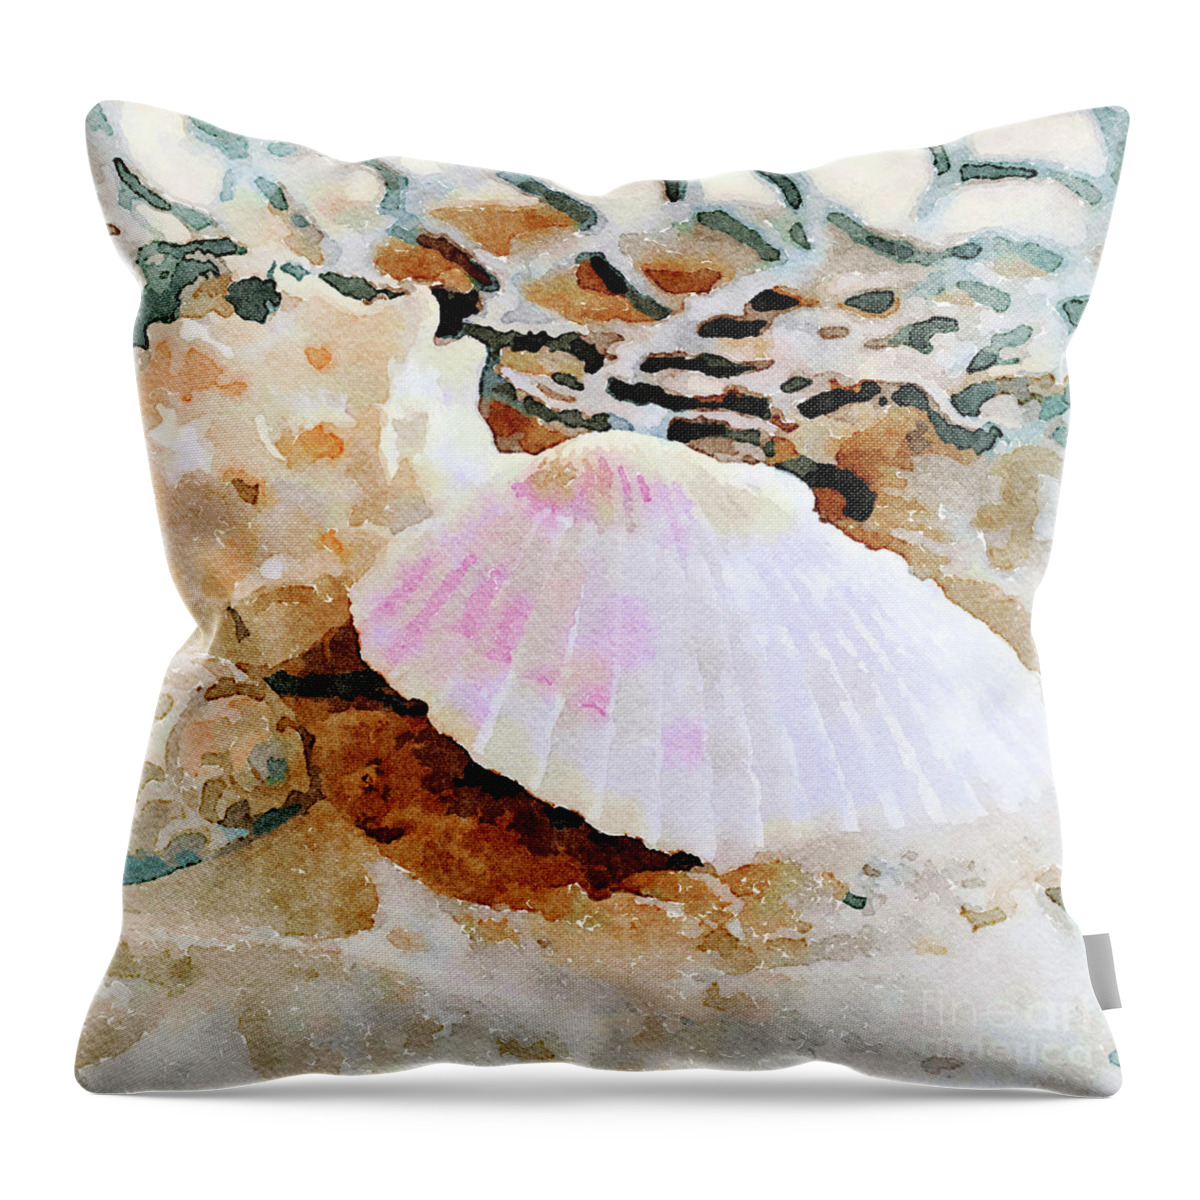 Digital Watercolor Throw Pillow featuring the digital art Shells by Betty LaRue